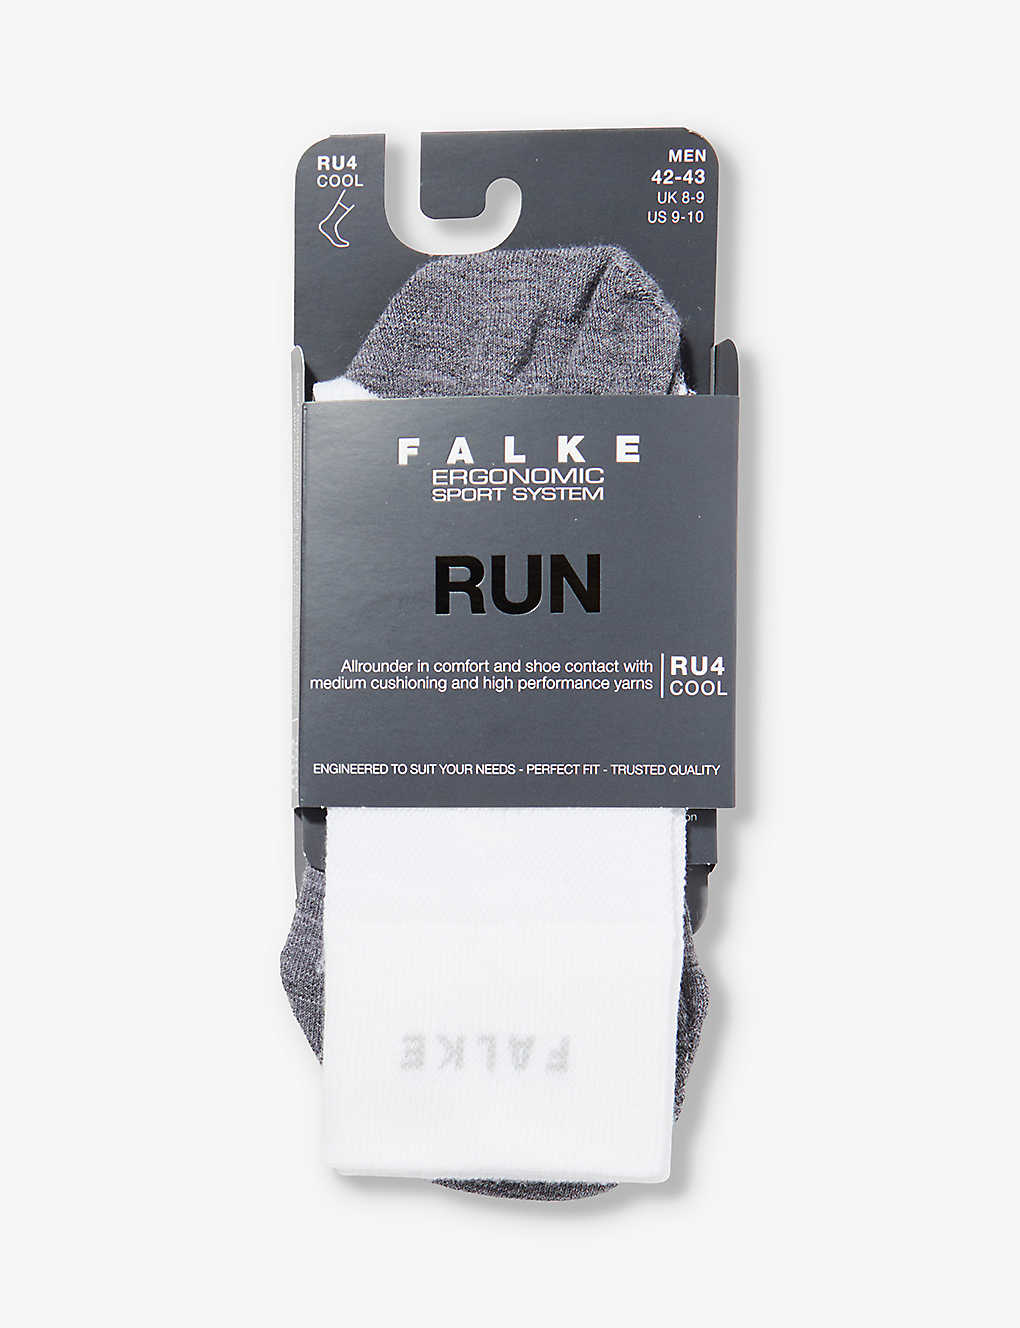 Falke Ergonomic Sport System Mens White Mix Ru4 Cool Run Mid-calf Abstract-pattern Knitted Socks